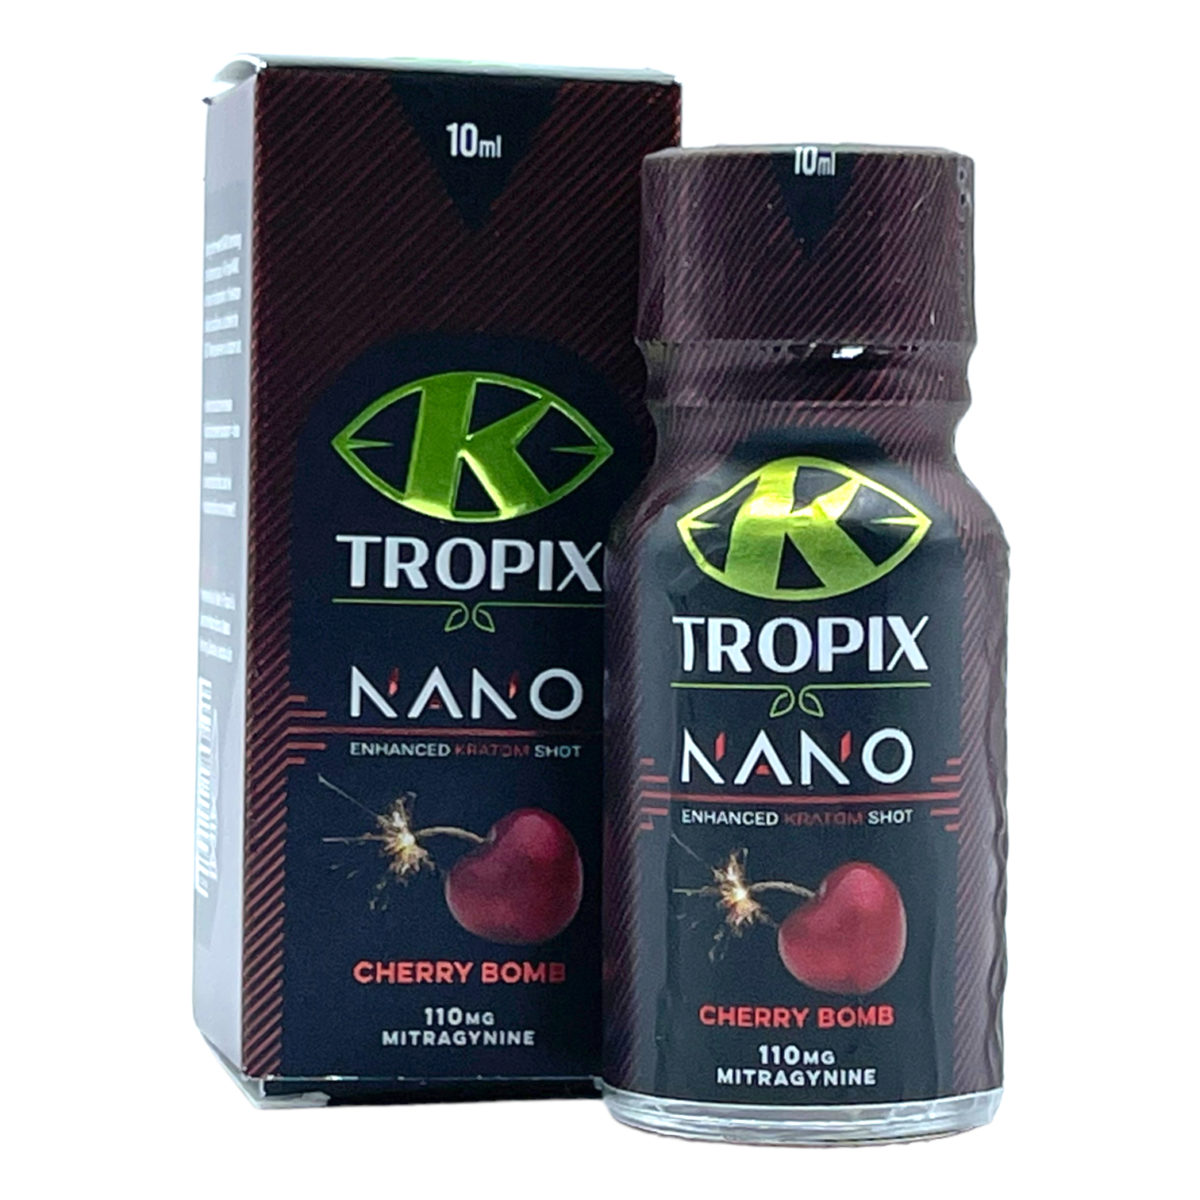 K-Tropix Exclusive Cherry Bomb Nano Kratom Shot – Buy 10 Get 2 Free